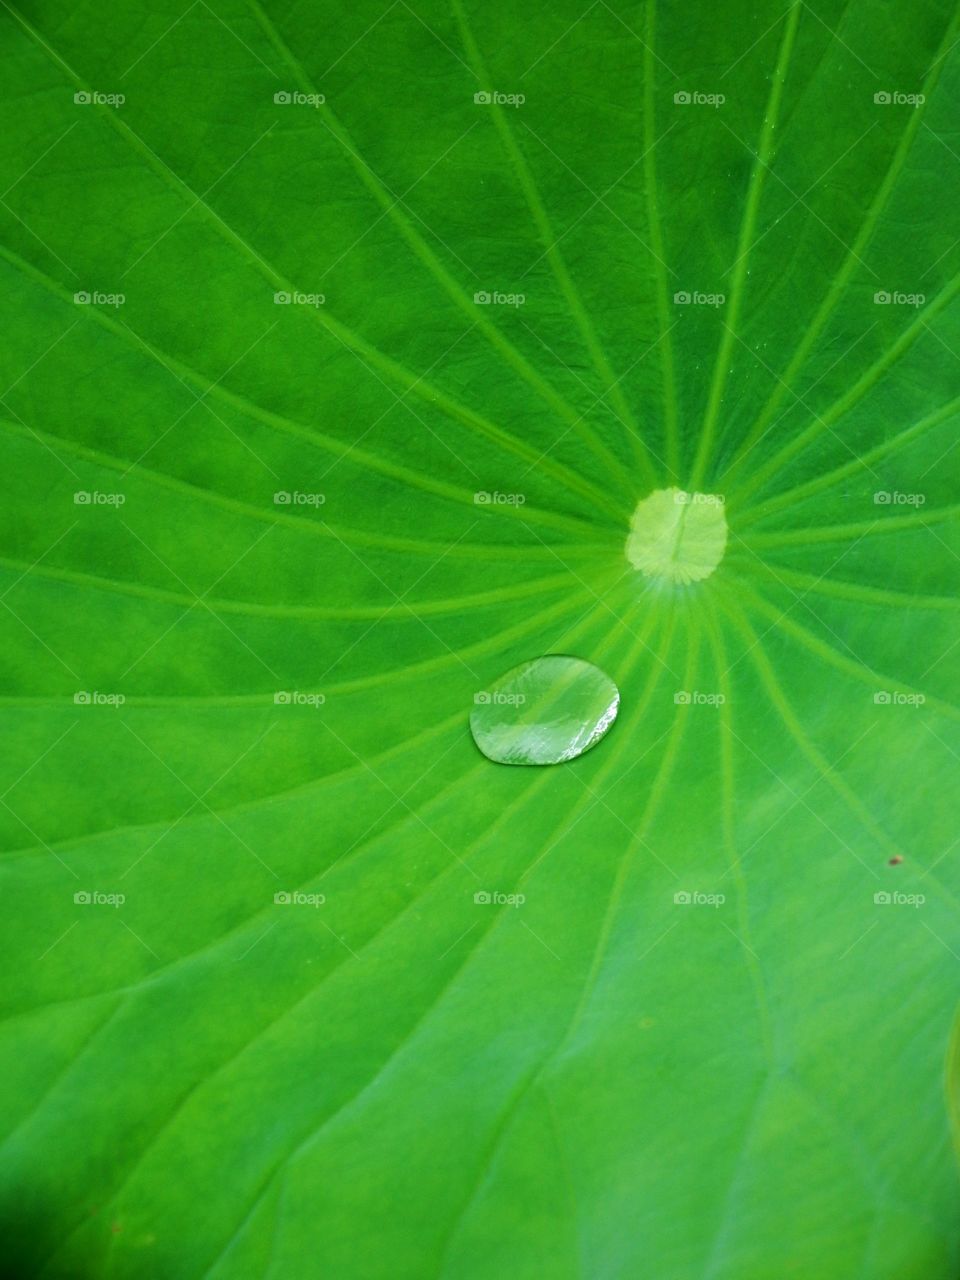 Macro water drop on a green leaf.